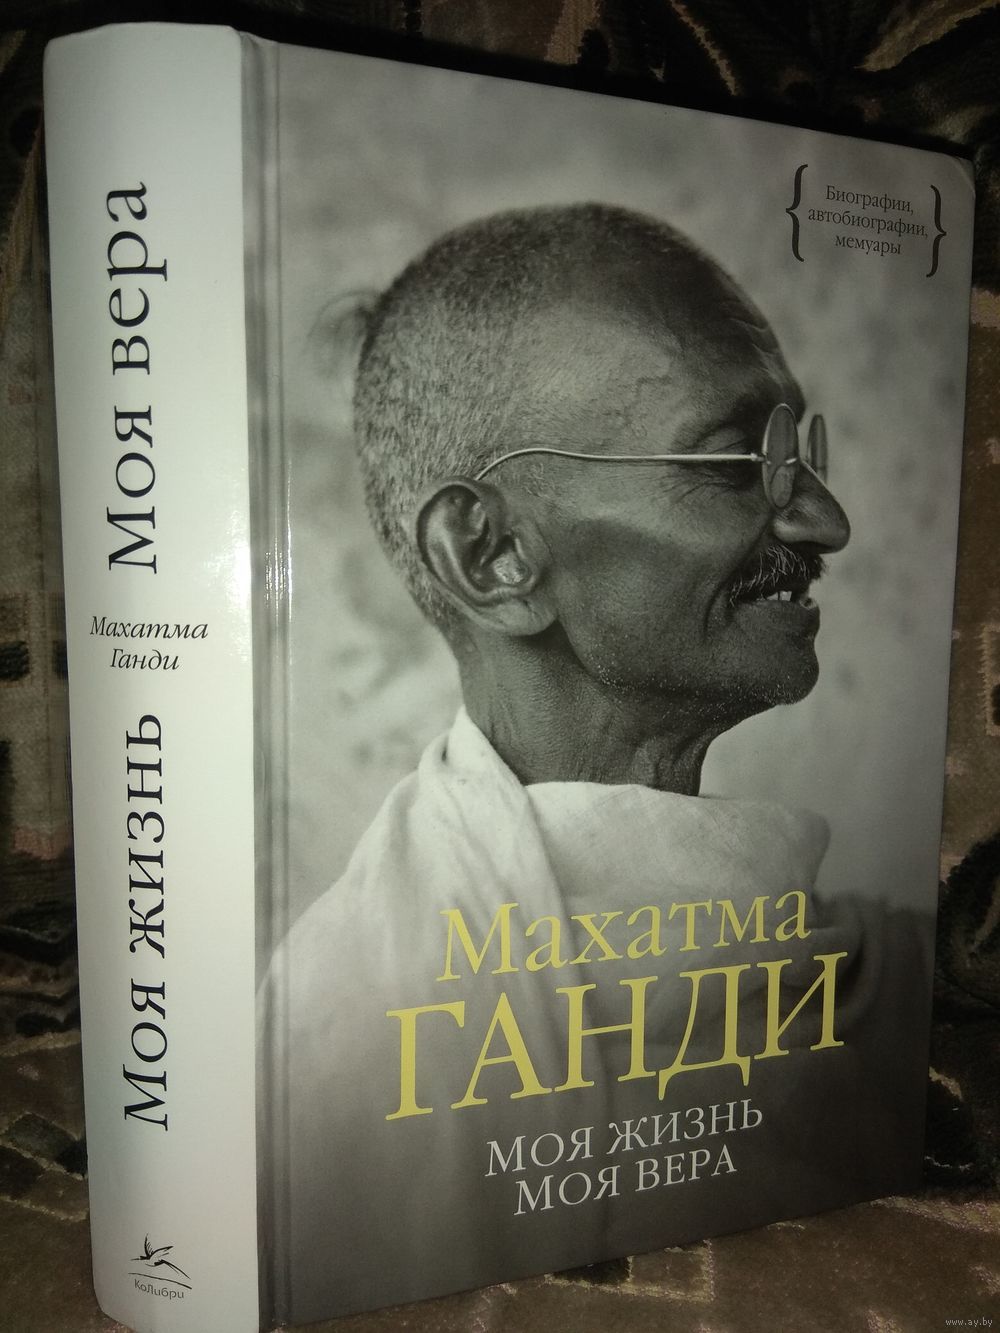 Книга  "Моя жизнь. Моя вера" Махатма Ганди